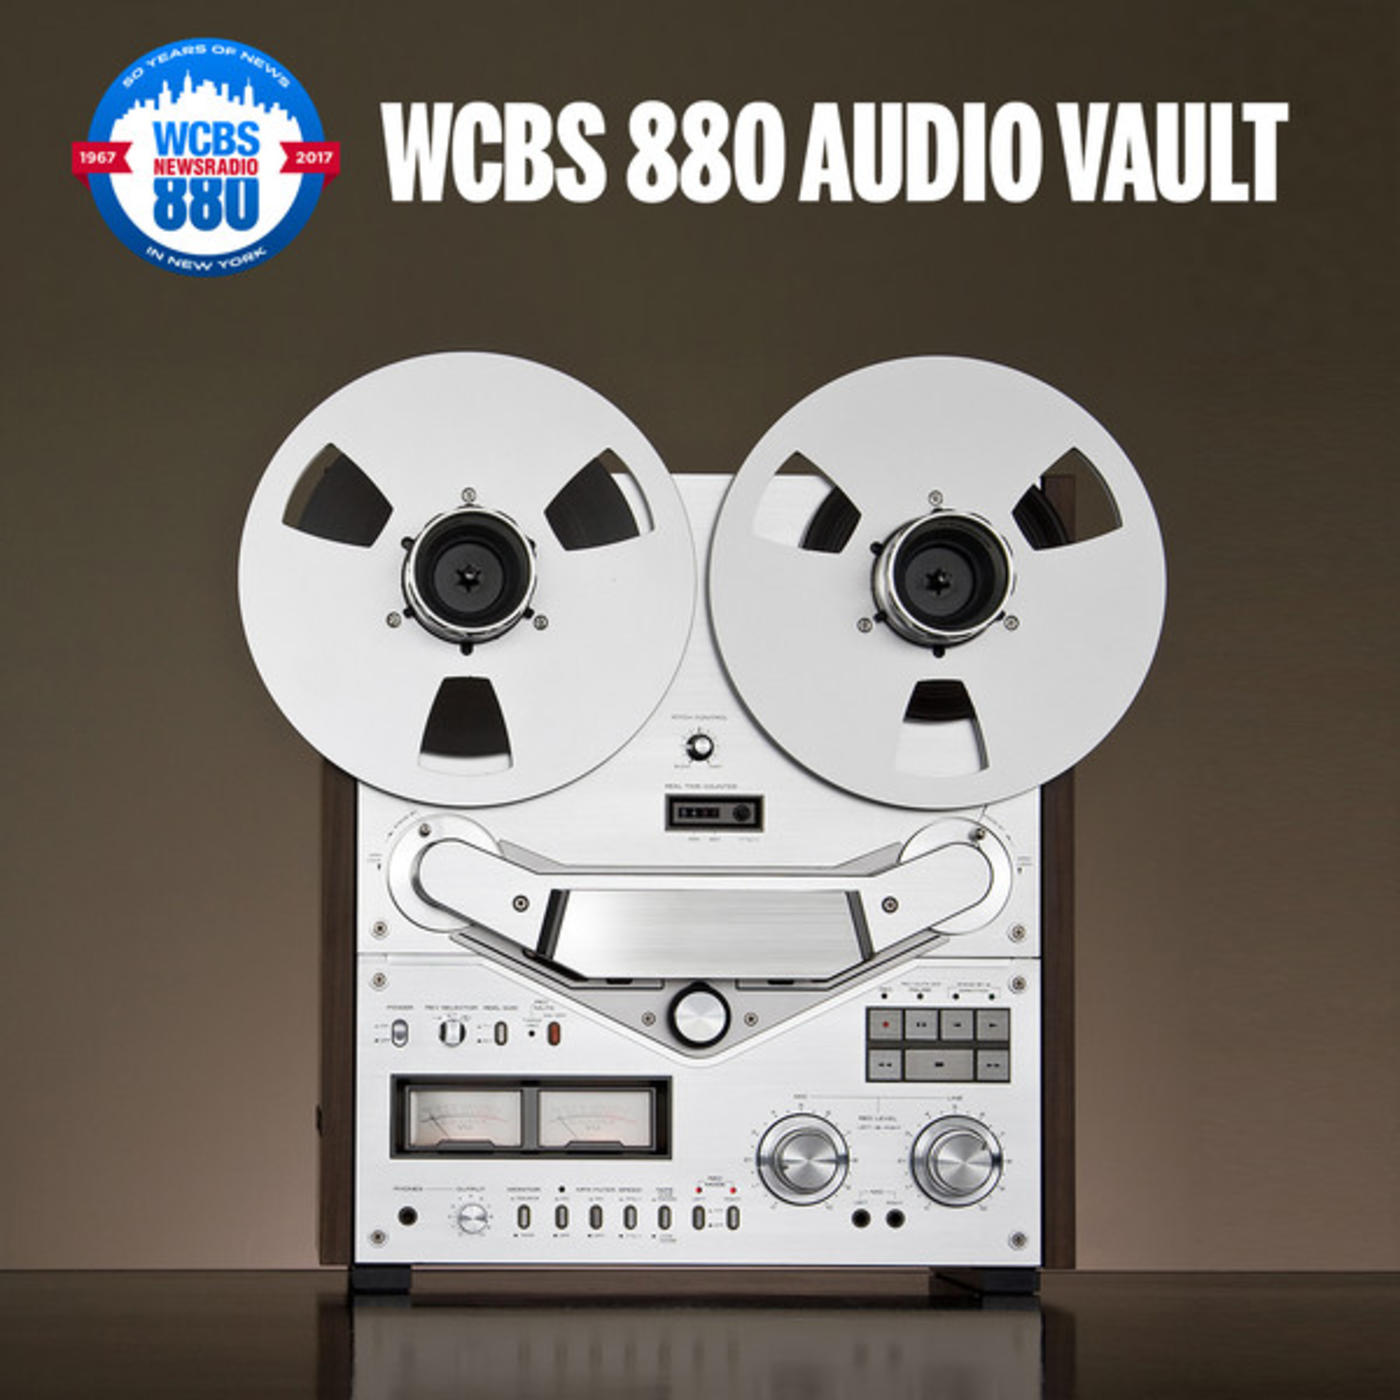 WCBS 880 Covers The 1993 WTC Bombing